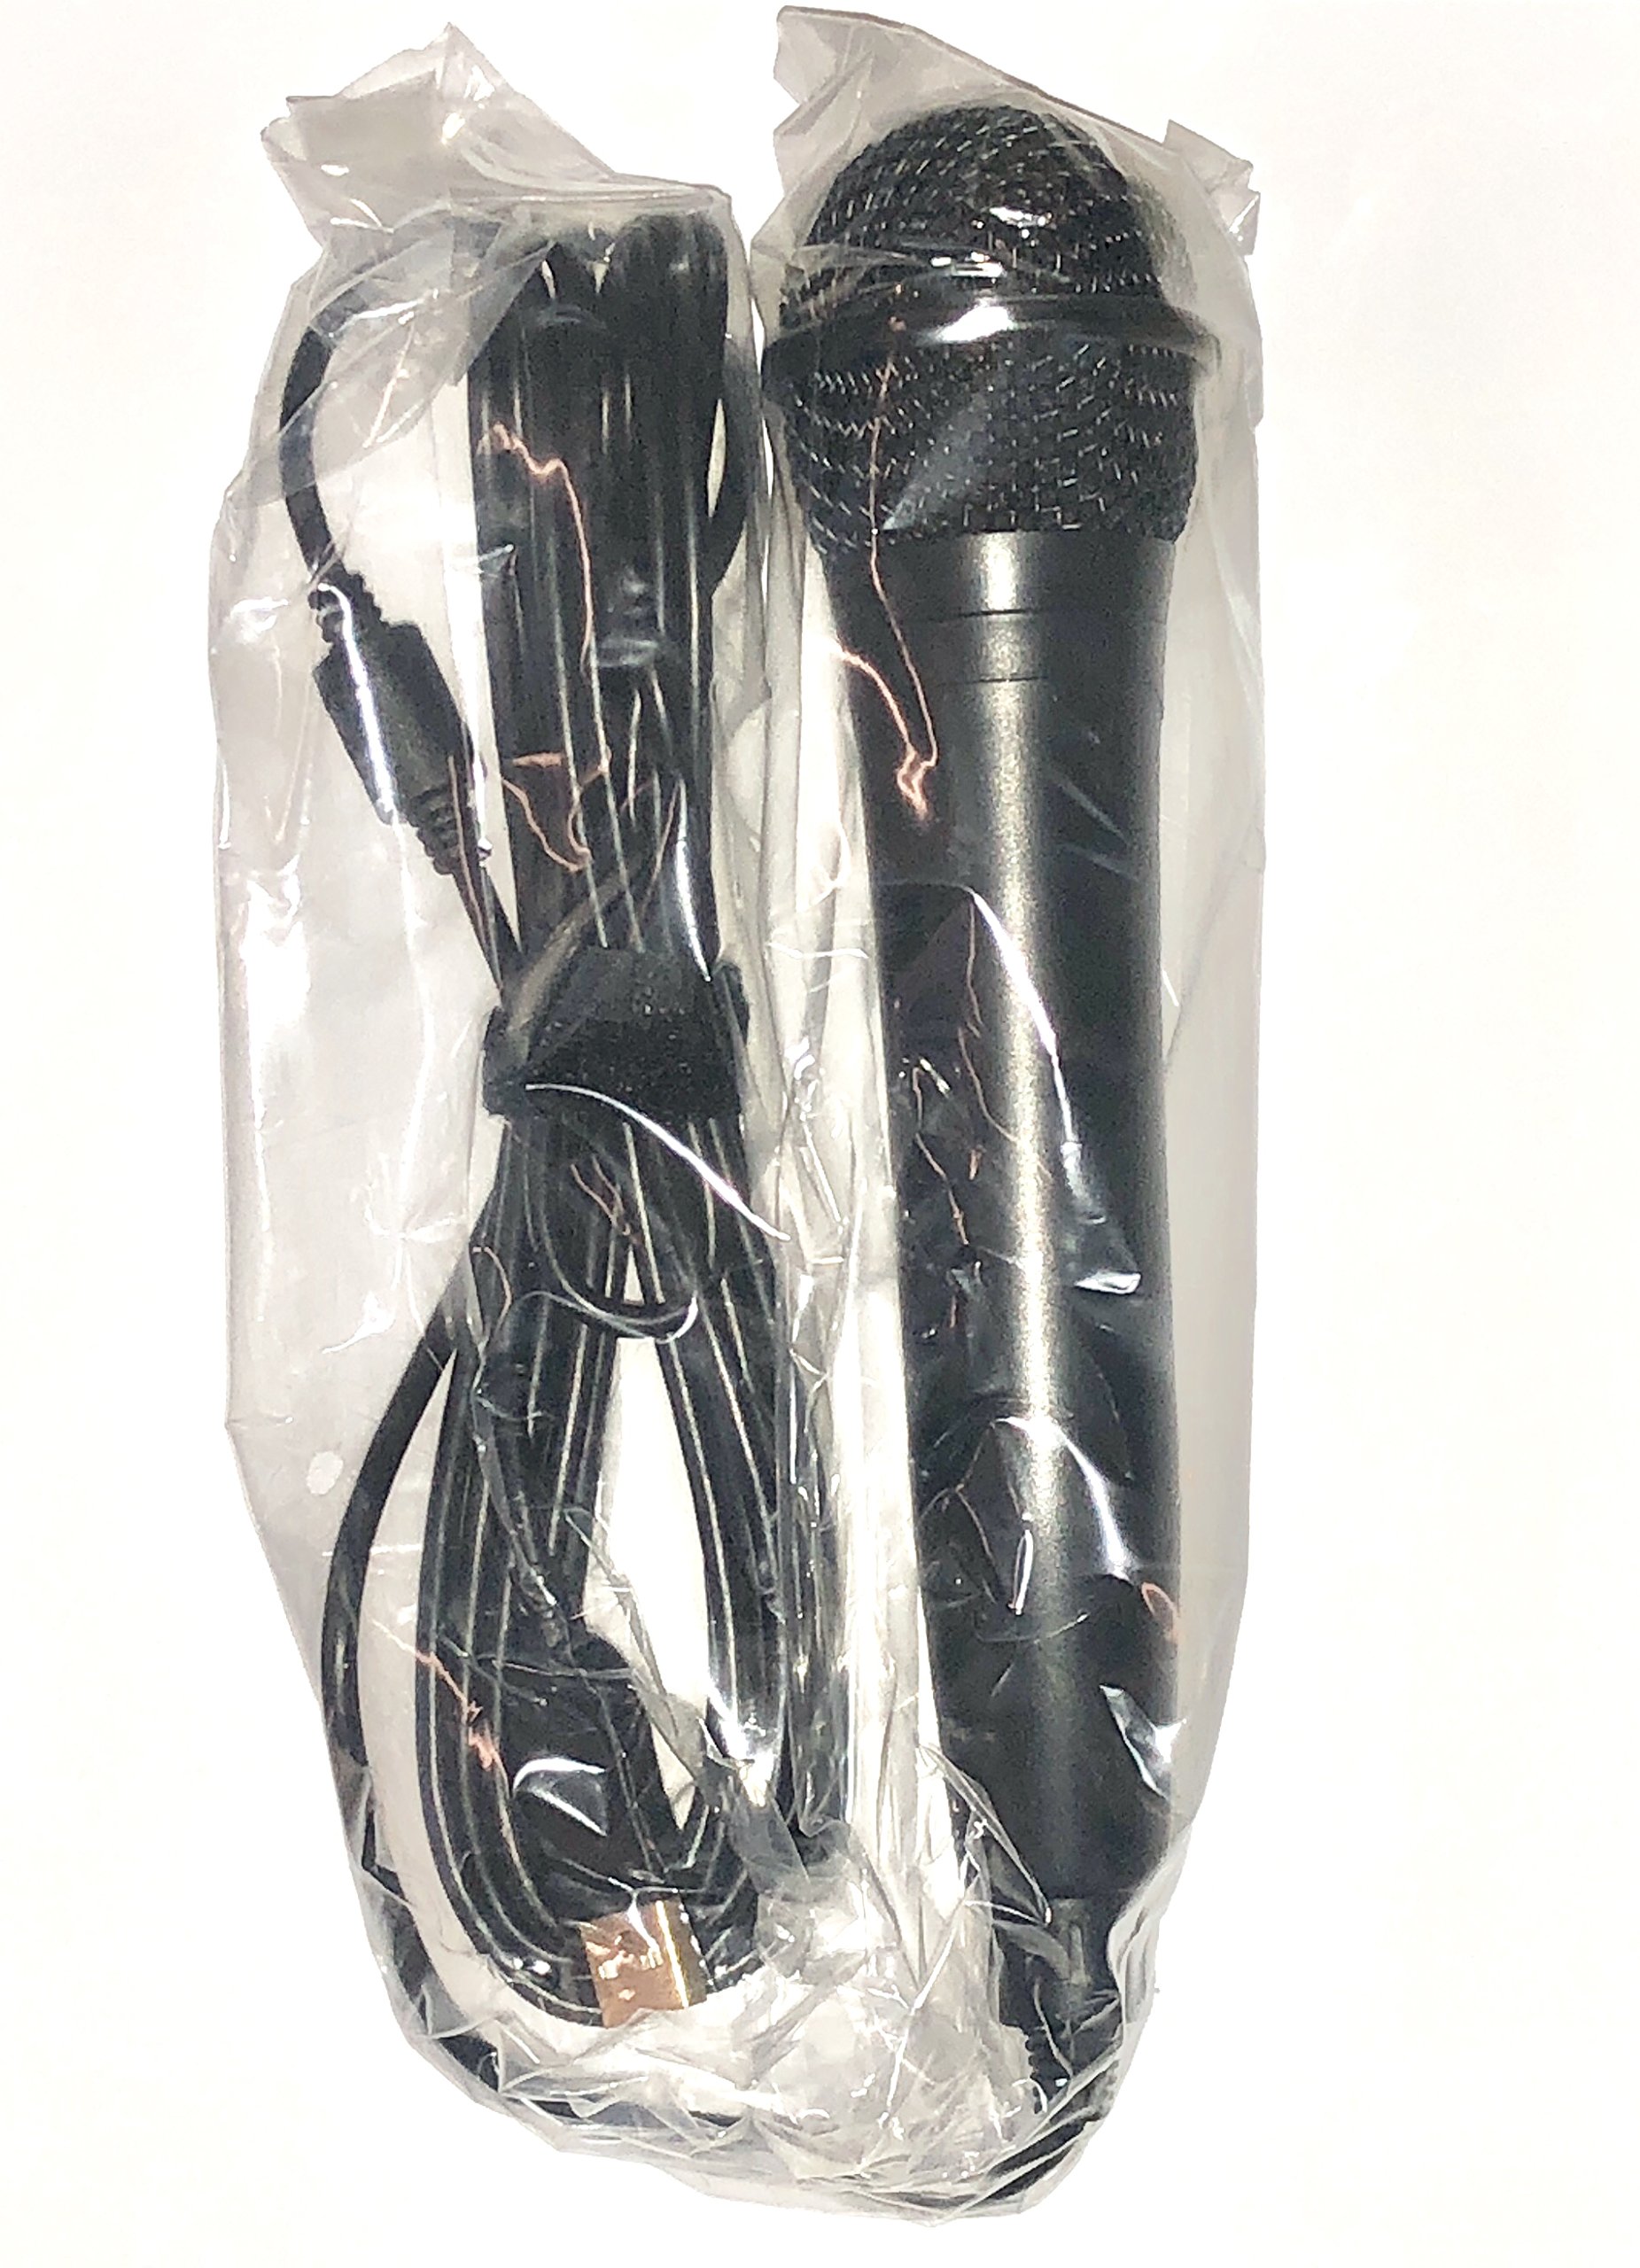 Rock Band USB Karaoke Microphone for PS3, PS4, X-Box One, X-Box 360, PC & Mac -Nintendo Switch